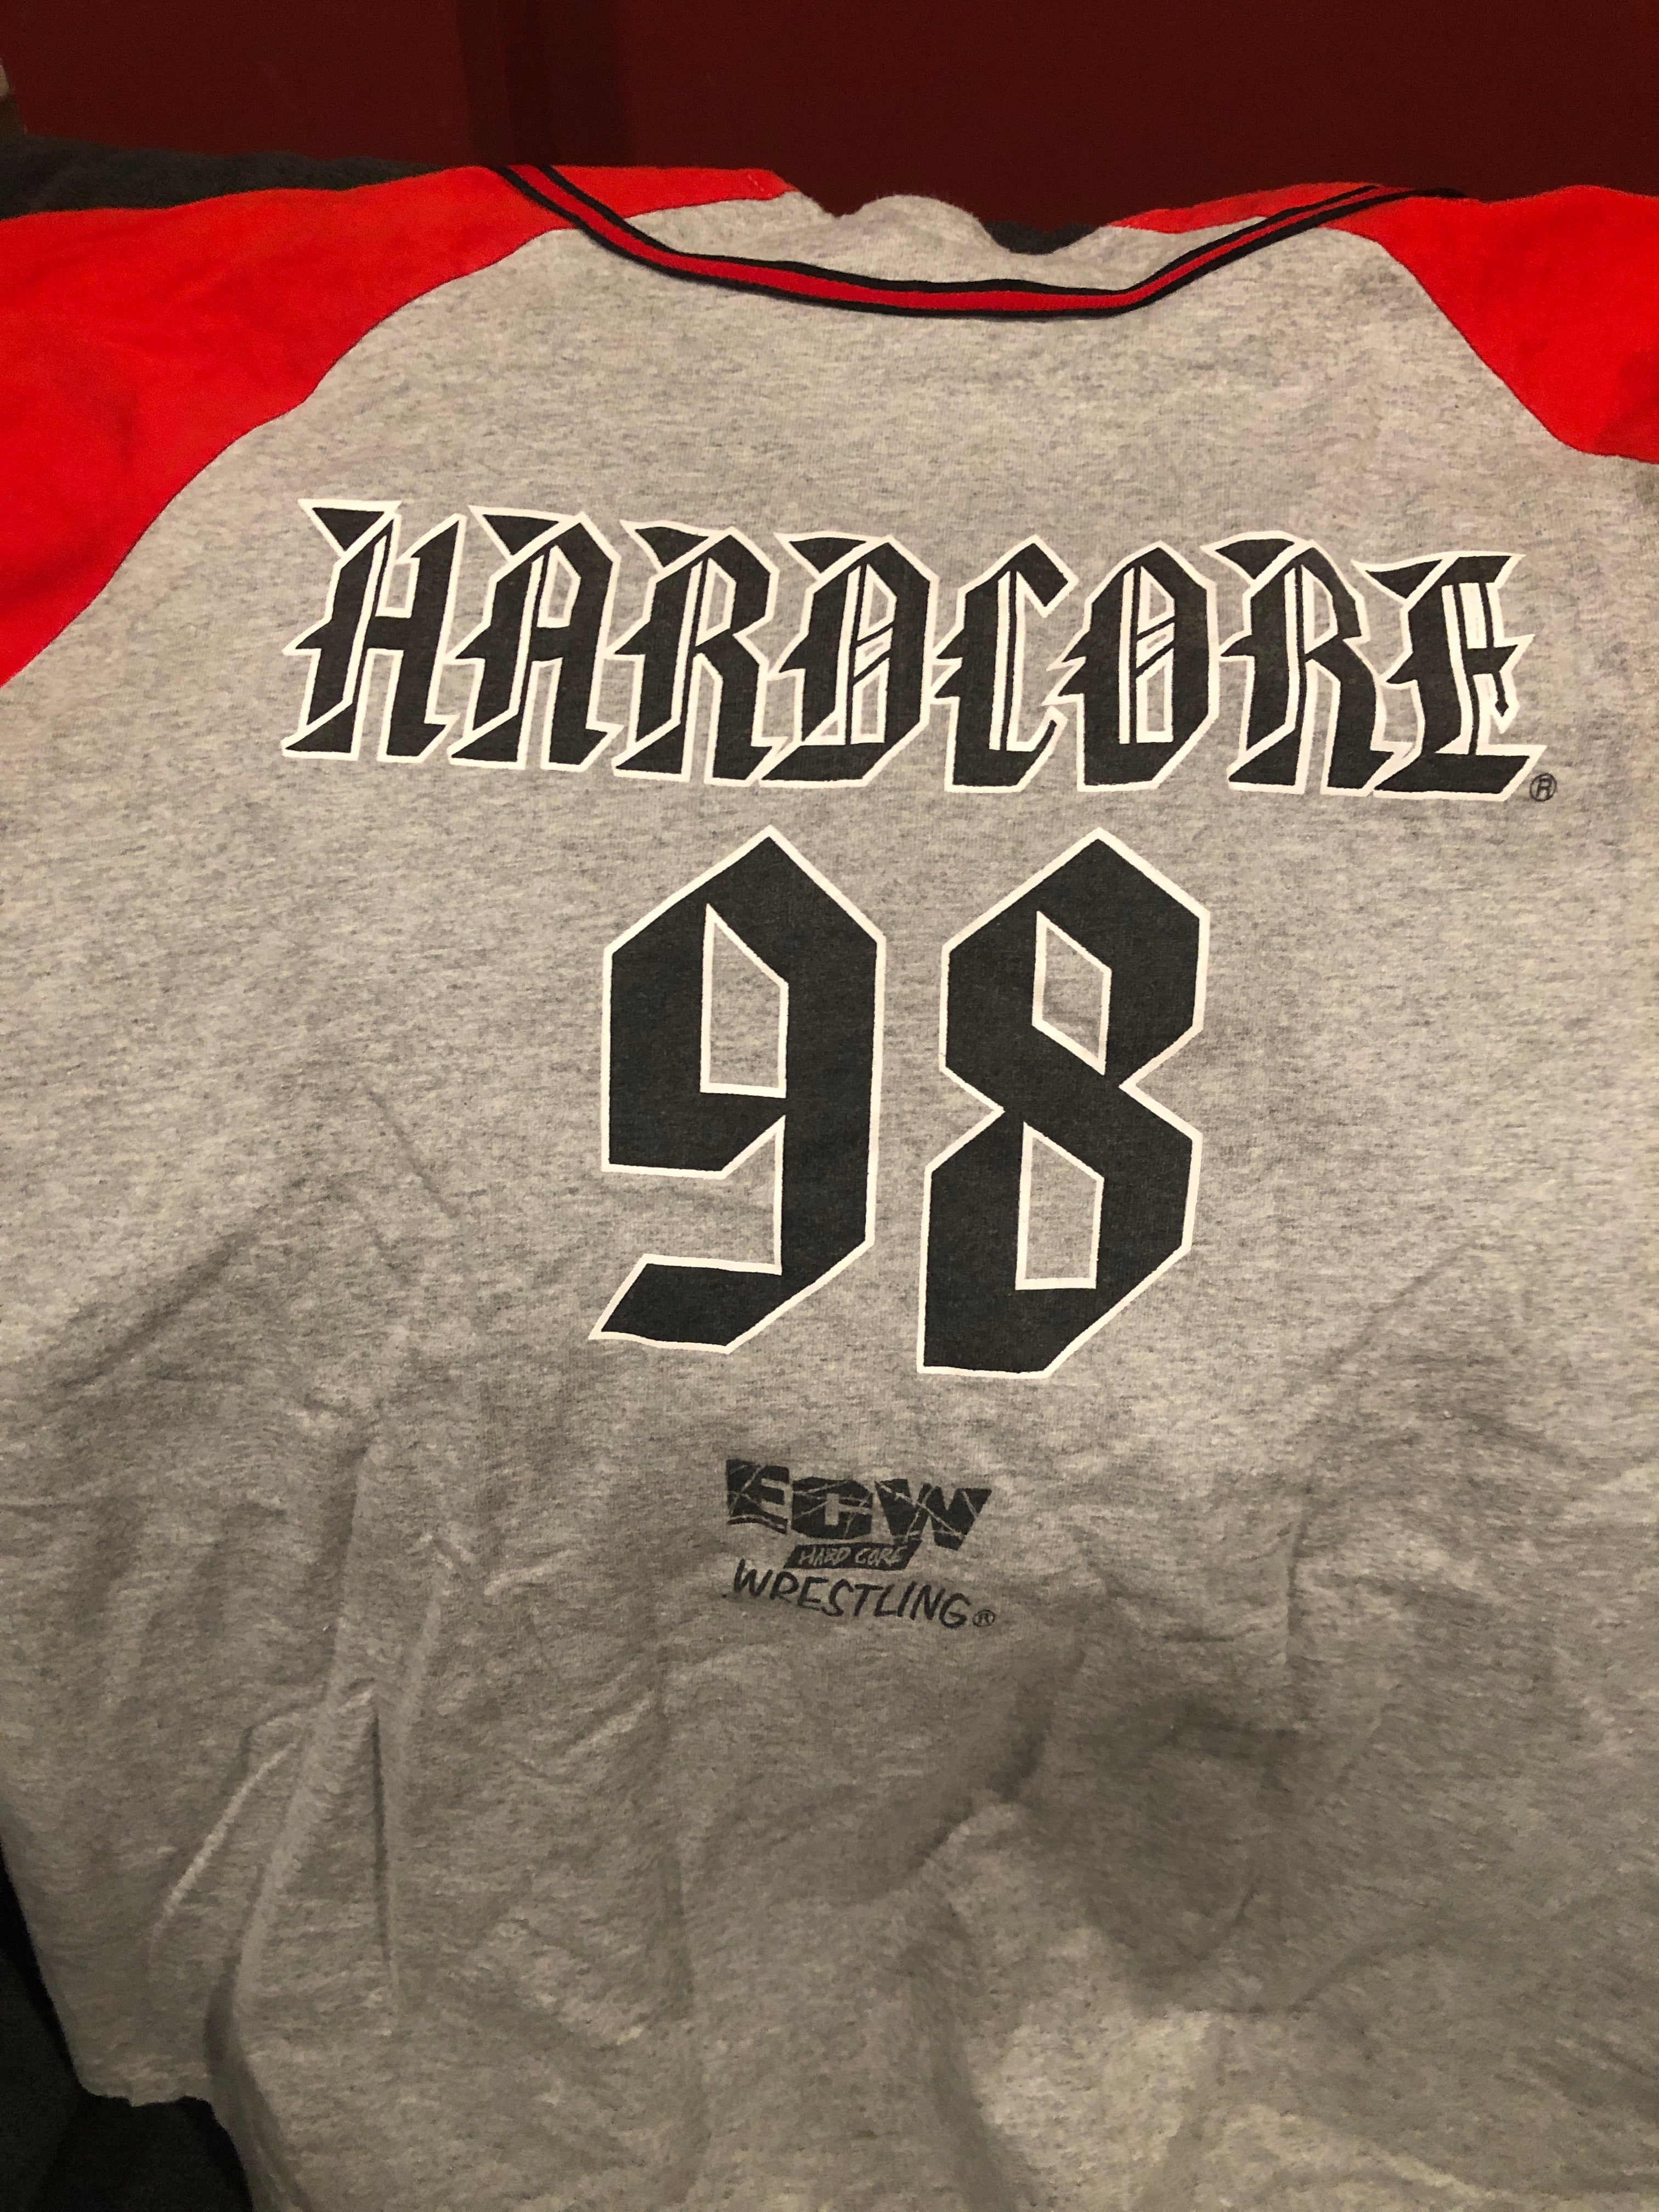 eenzaam versterking Melbourne Original ECW Hardcore 98 Baseball Jersey (Size: XL / Worn) – Signed By  Superstars